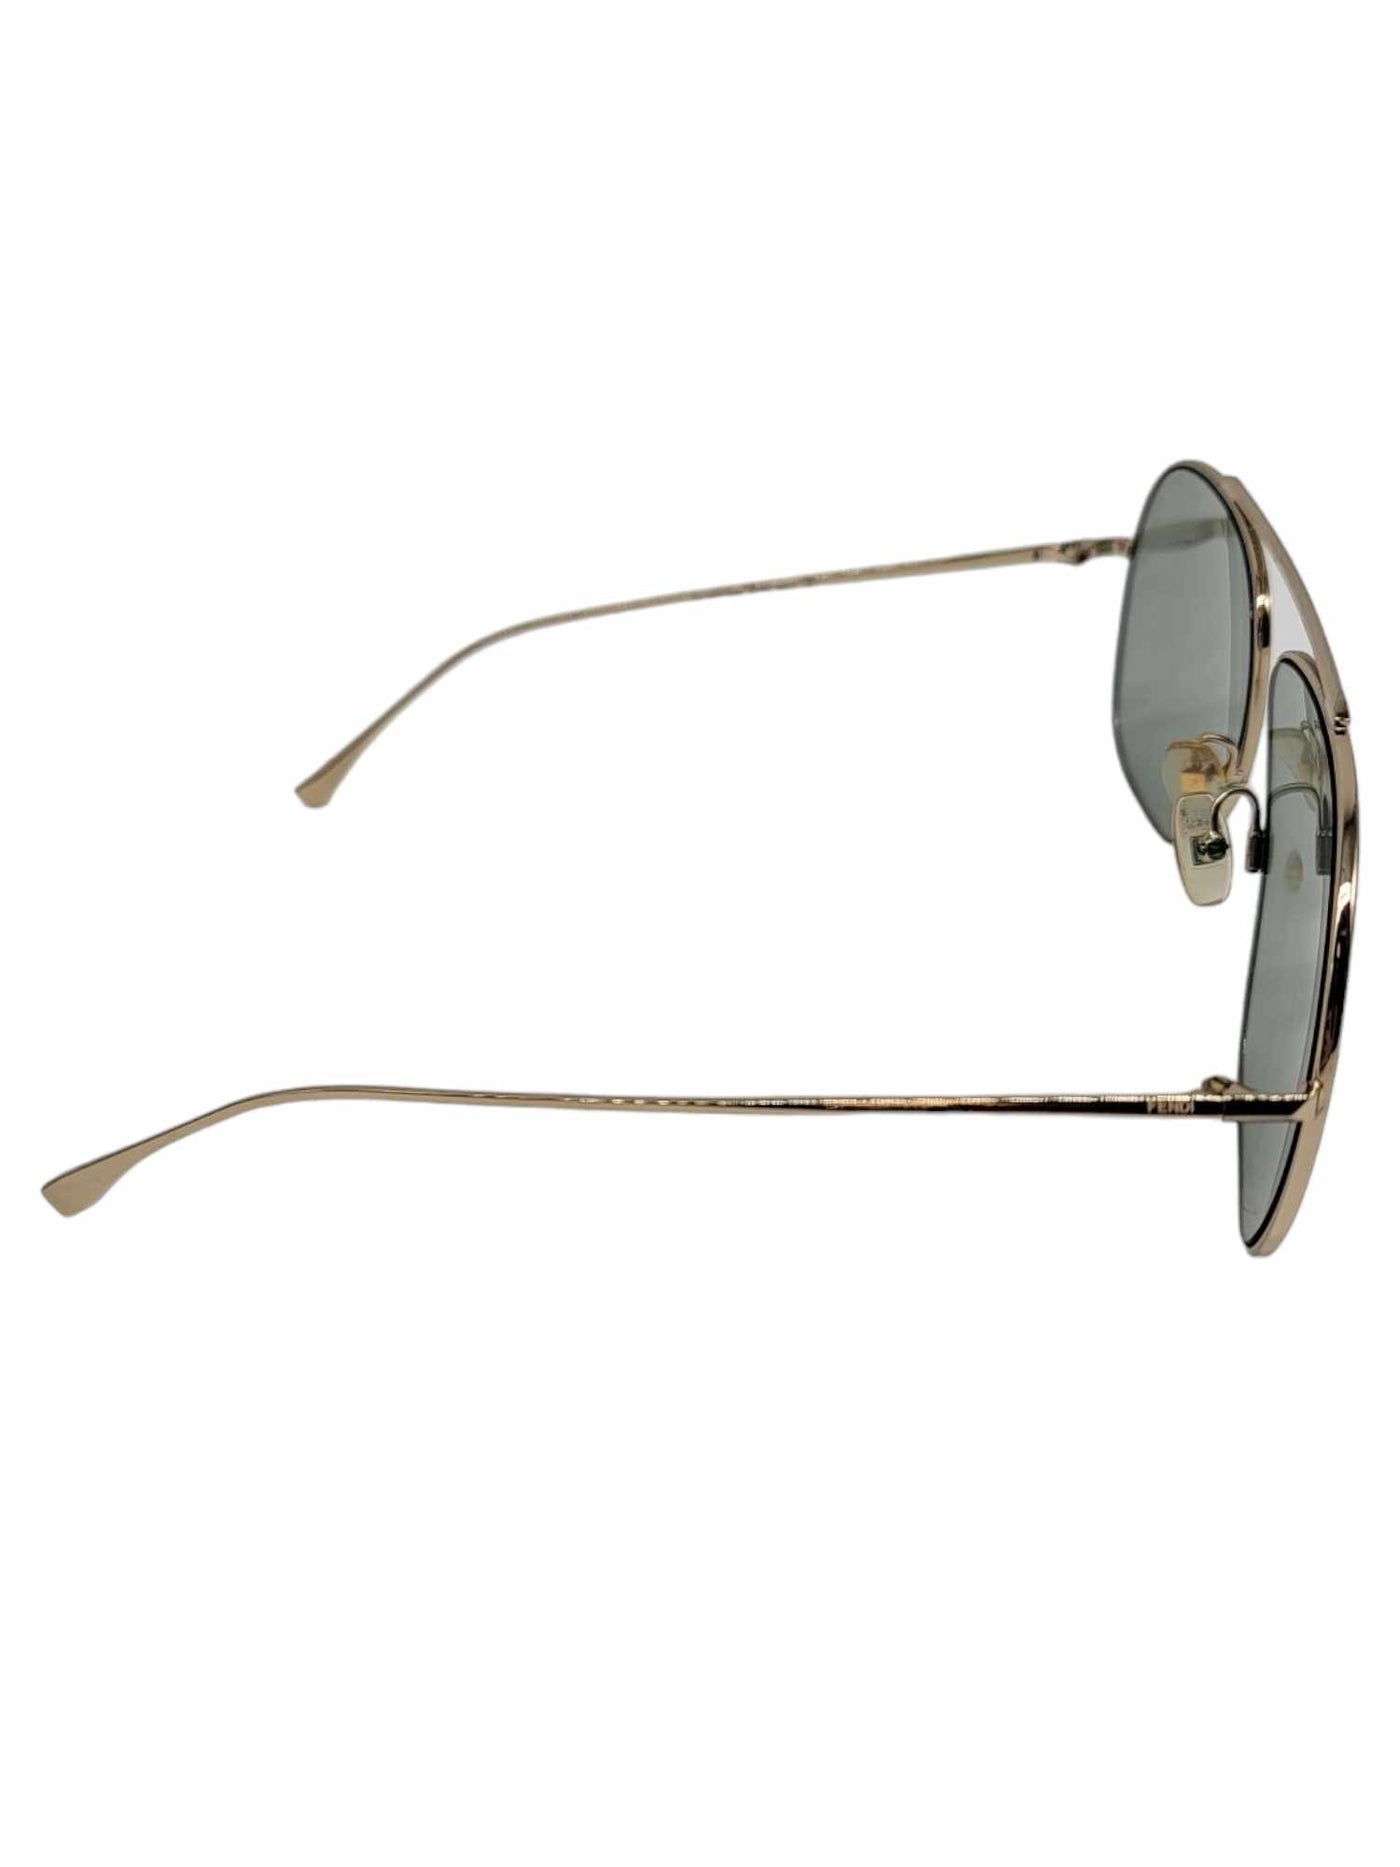 Fendi "FF" Lens 1970 Inspired Retro Sunglasses 64 - 11 - 135